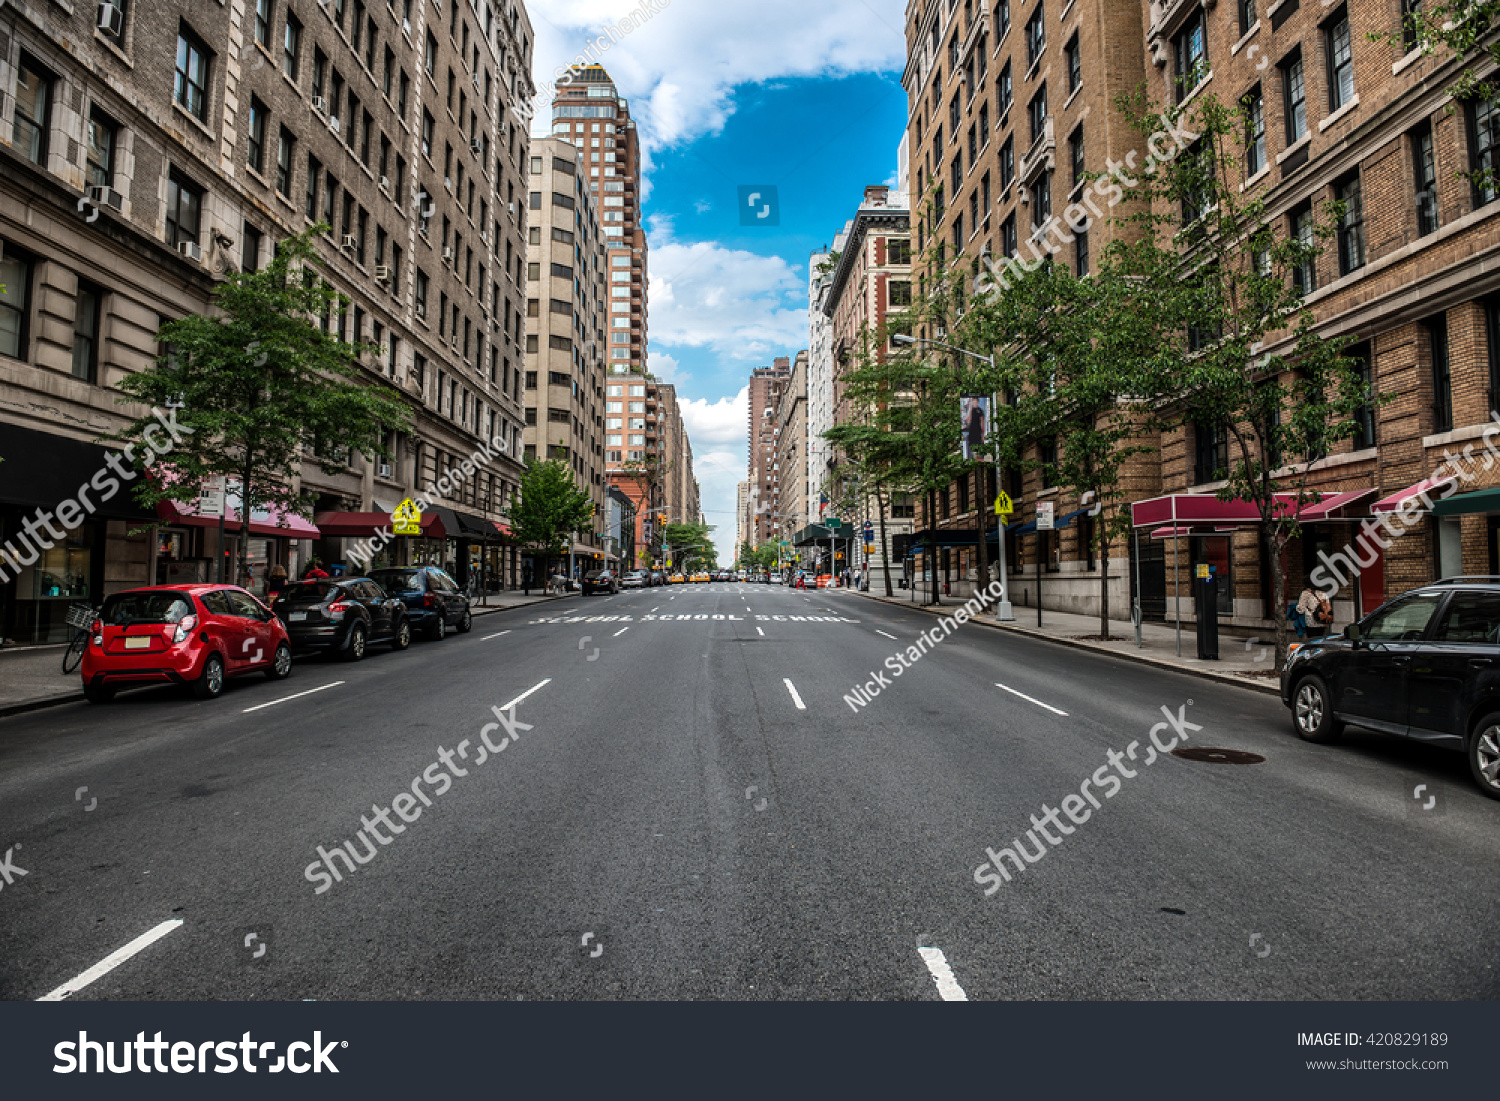 New York City Manhattan empty street at Midtown at sunny day #420829189